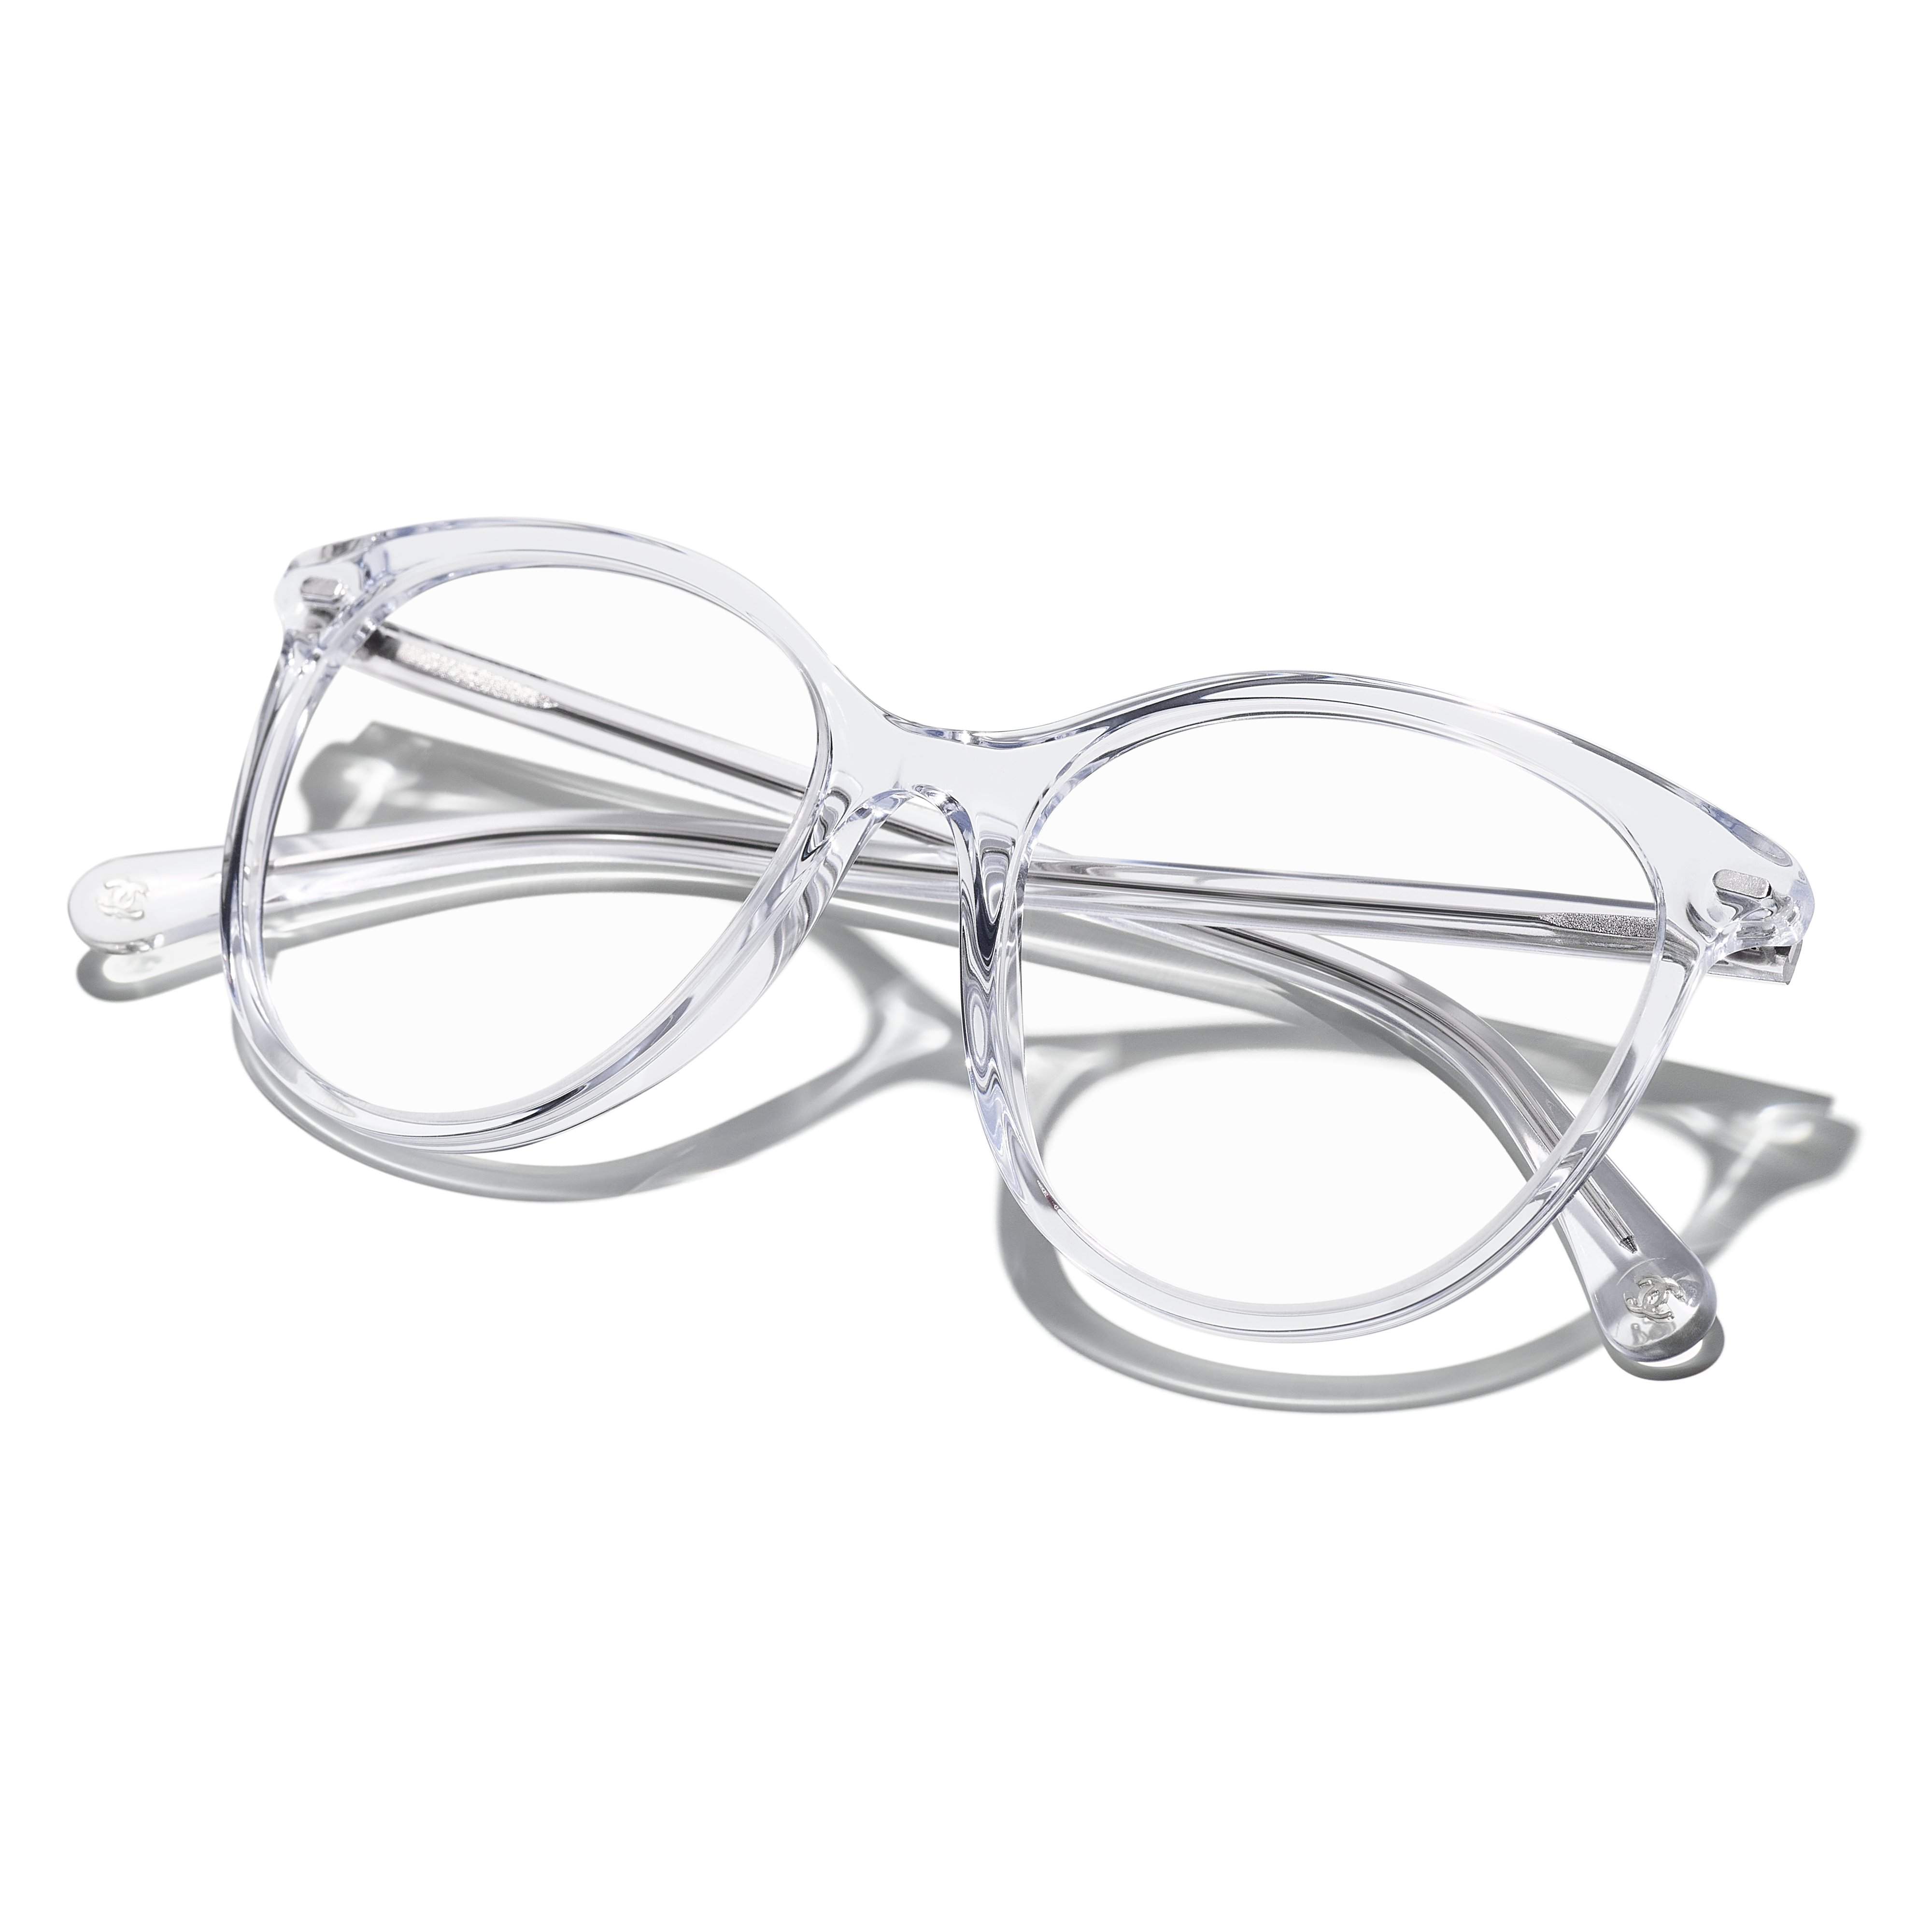 Chanel 3414 C660 Glasses - US